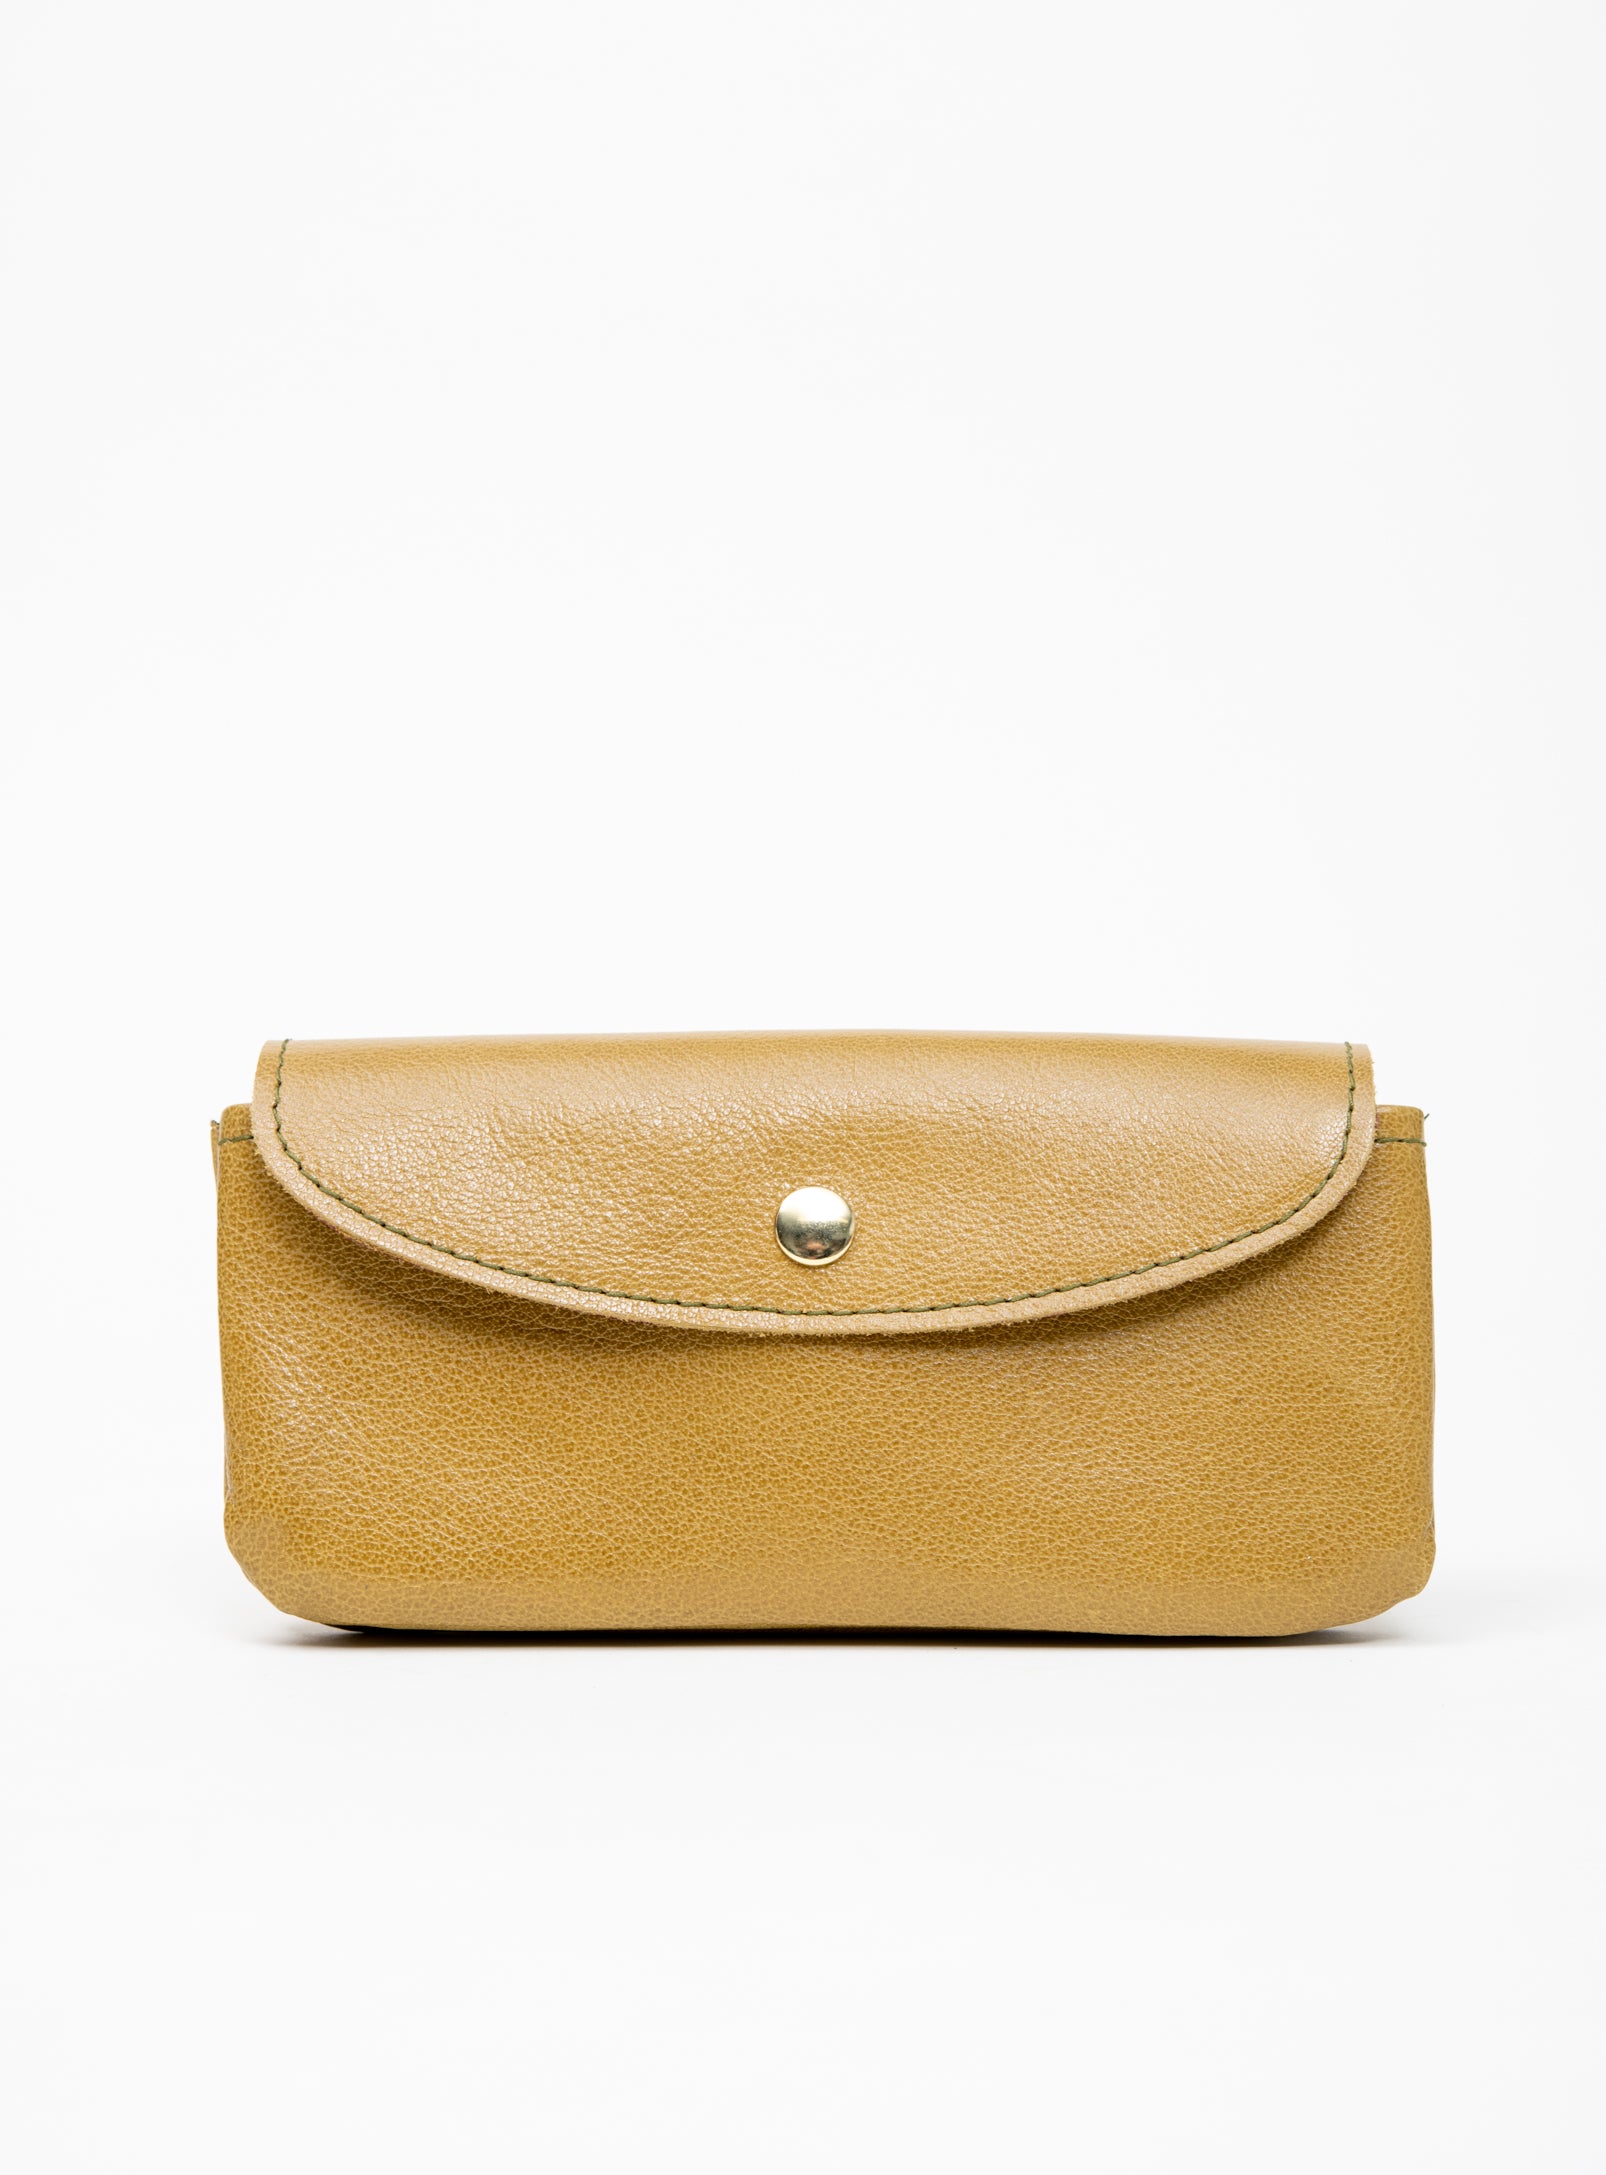 Veinage Minimalist leather wallet MARQUETTE model